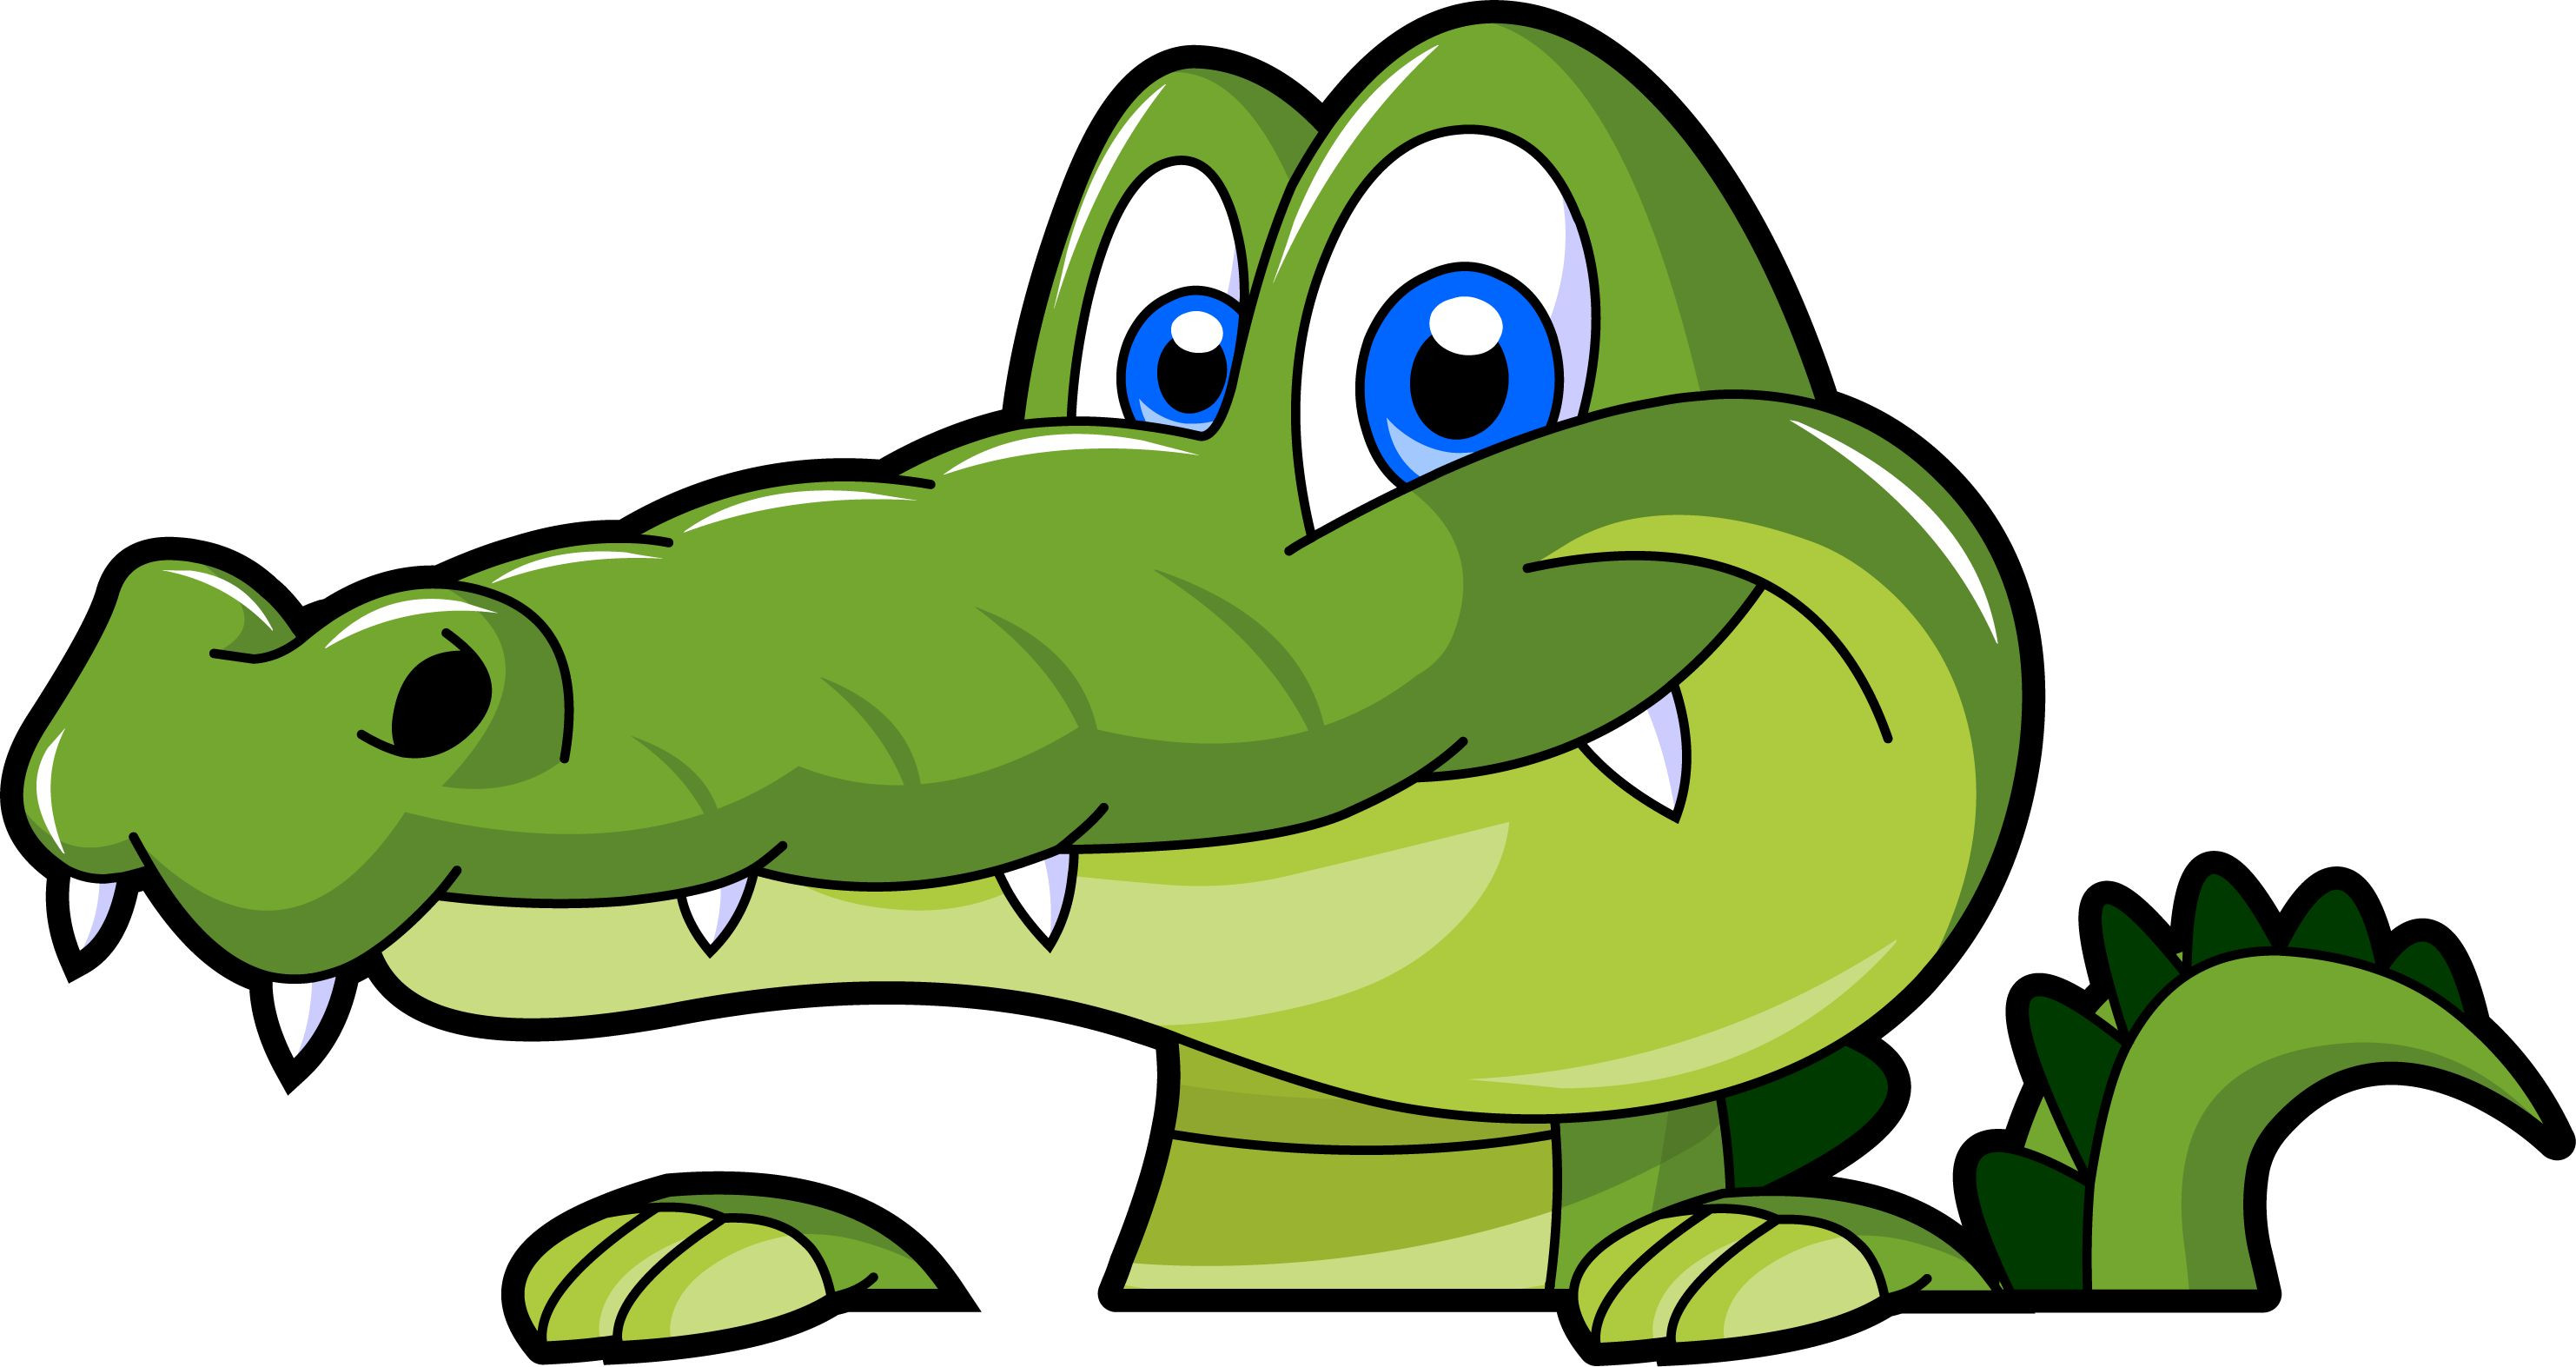 Cartoon Alligator Clipart at GetDrawings.com.